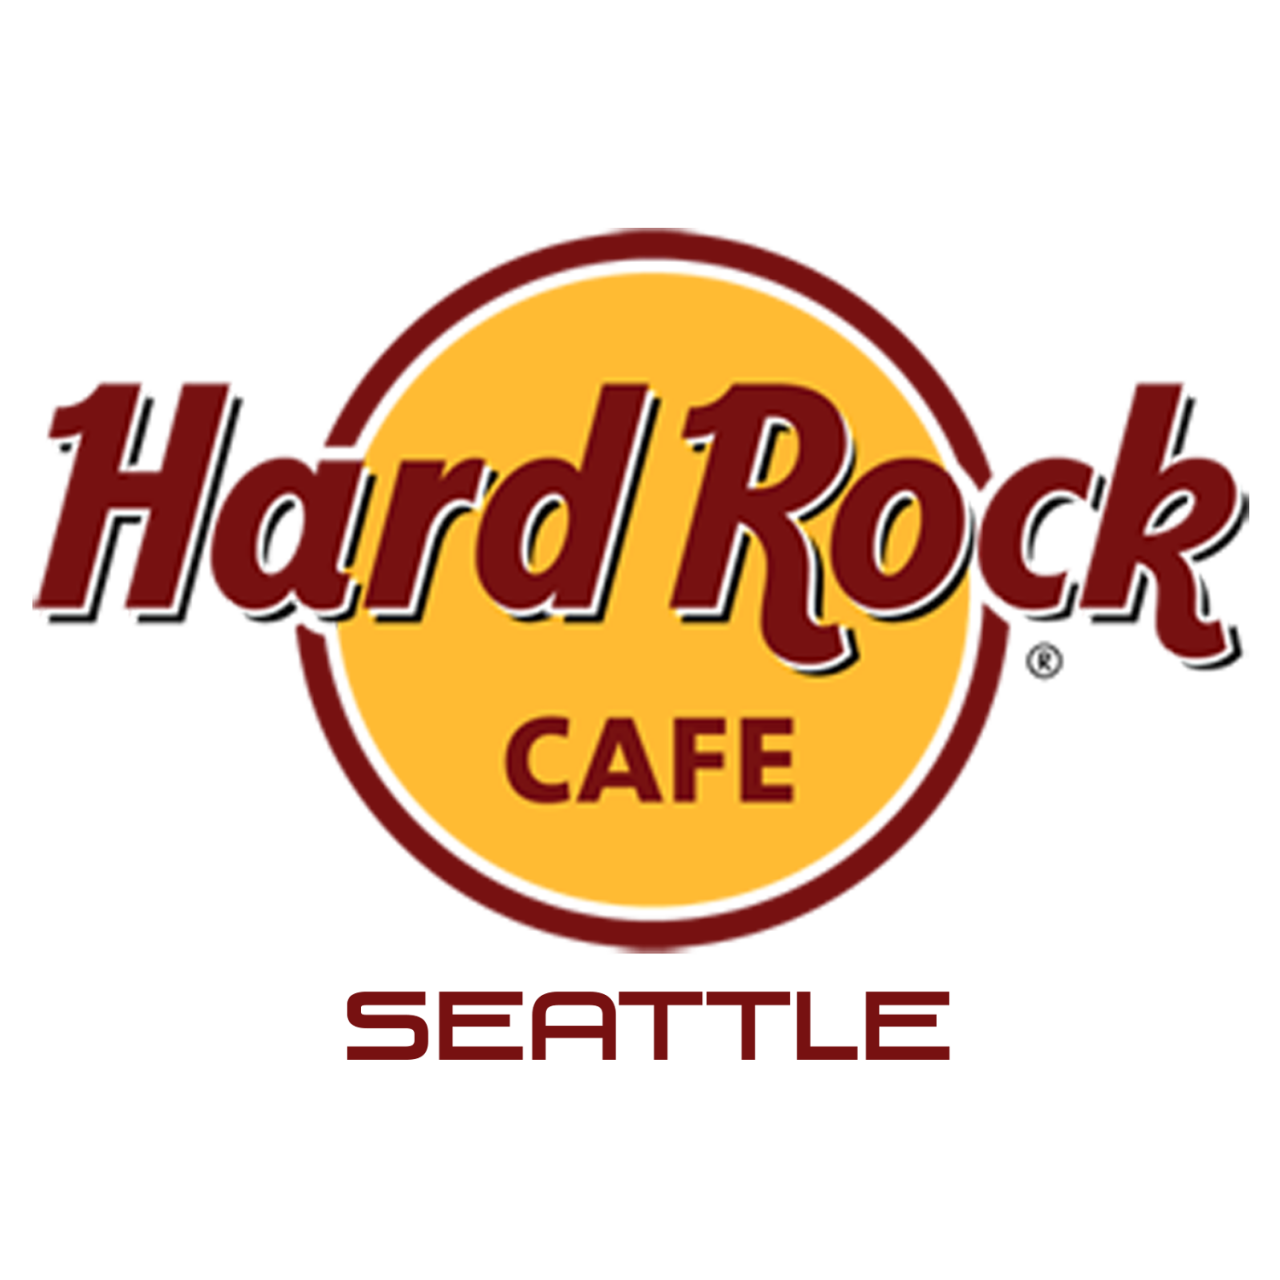 Hard Rock Cafe Seattle